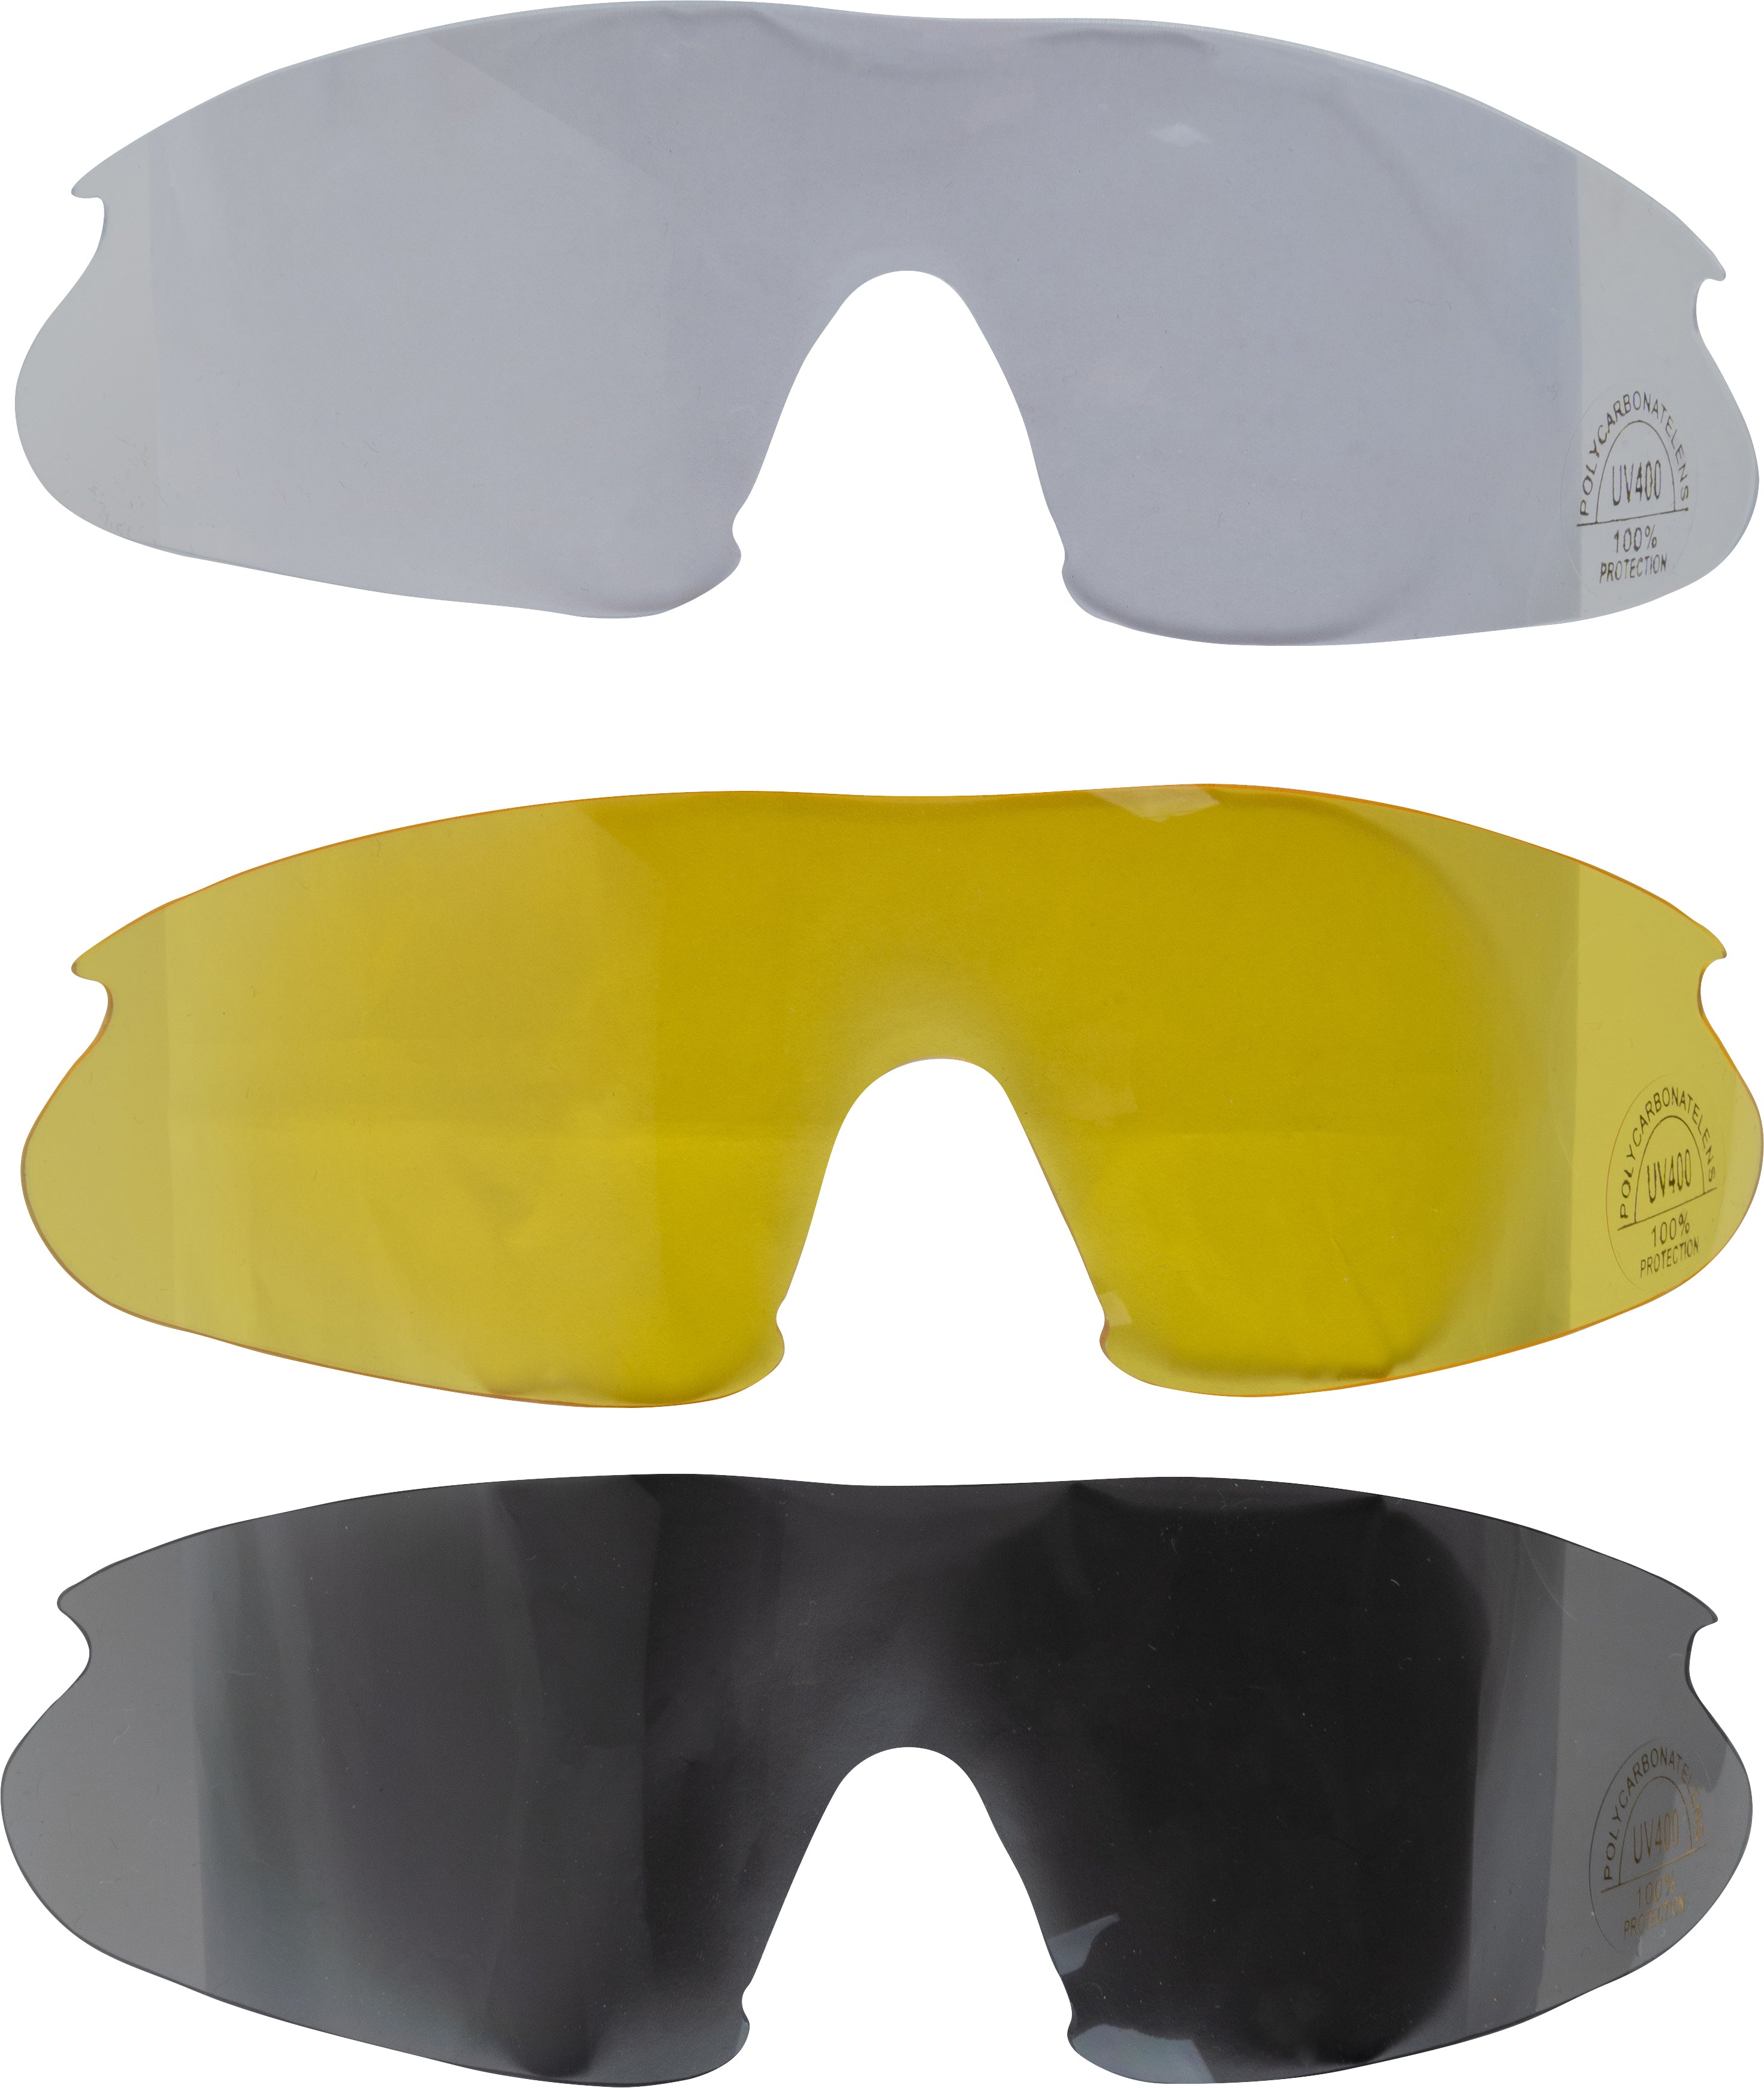 Jack Pyke Pro-Sport Shooting Glasses in Clear, Smoke, Yellow